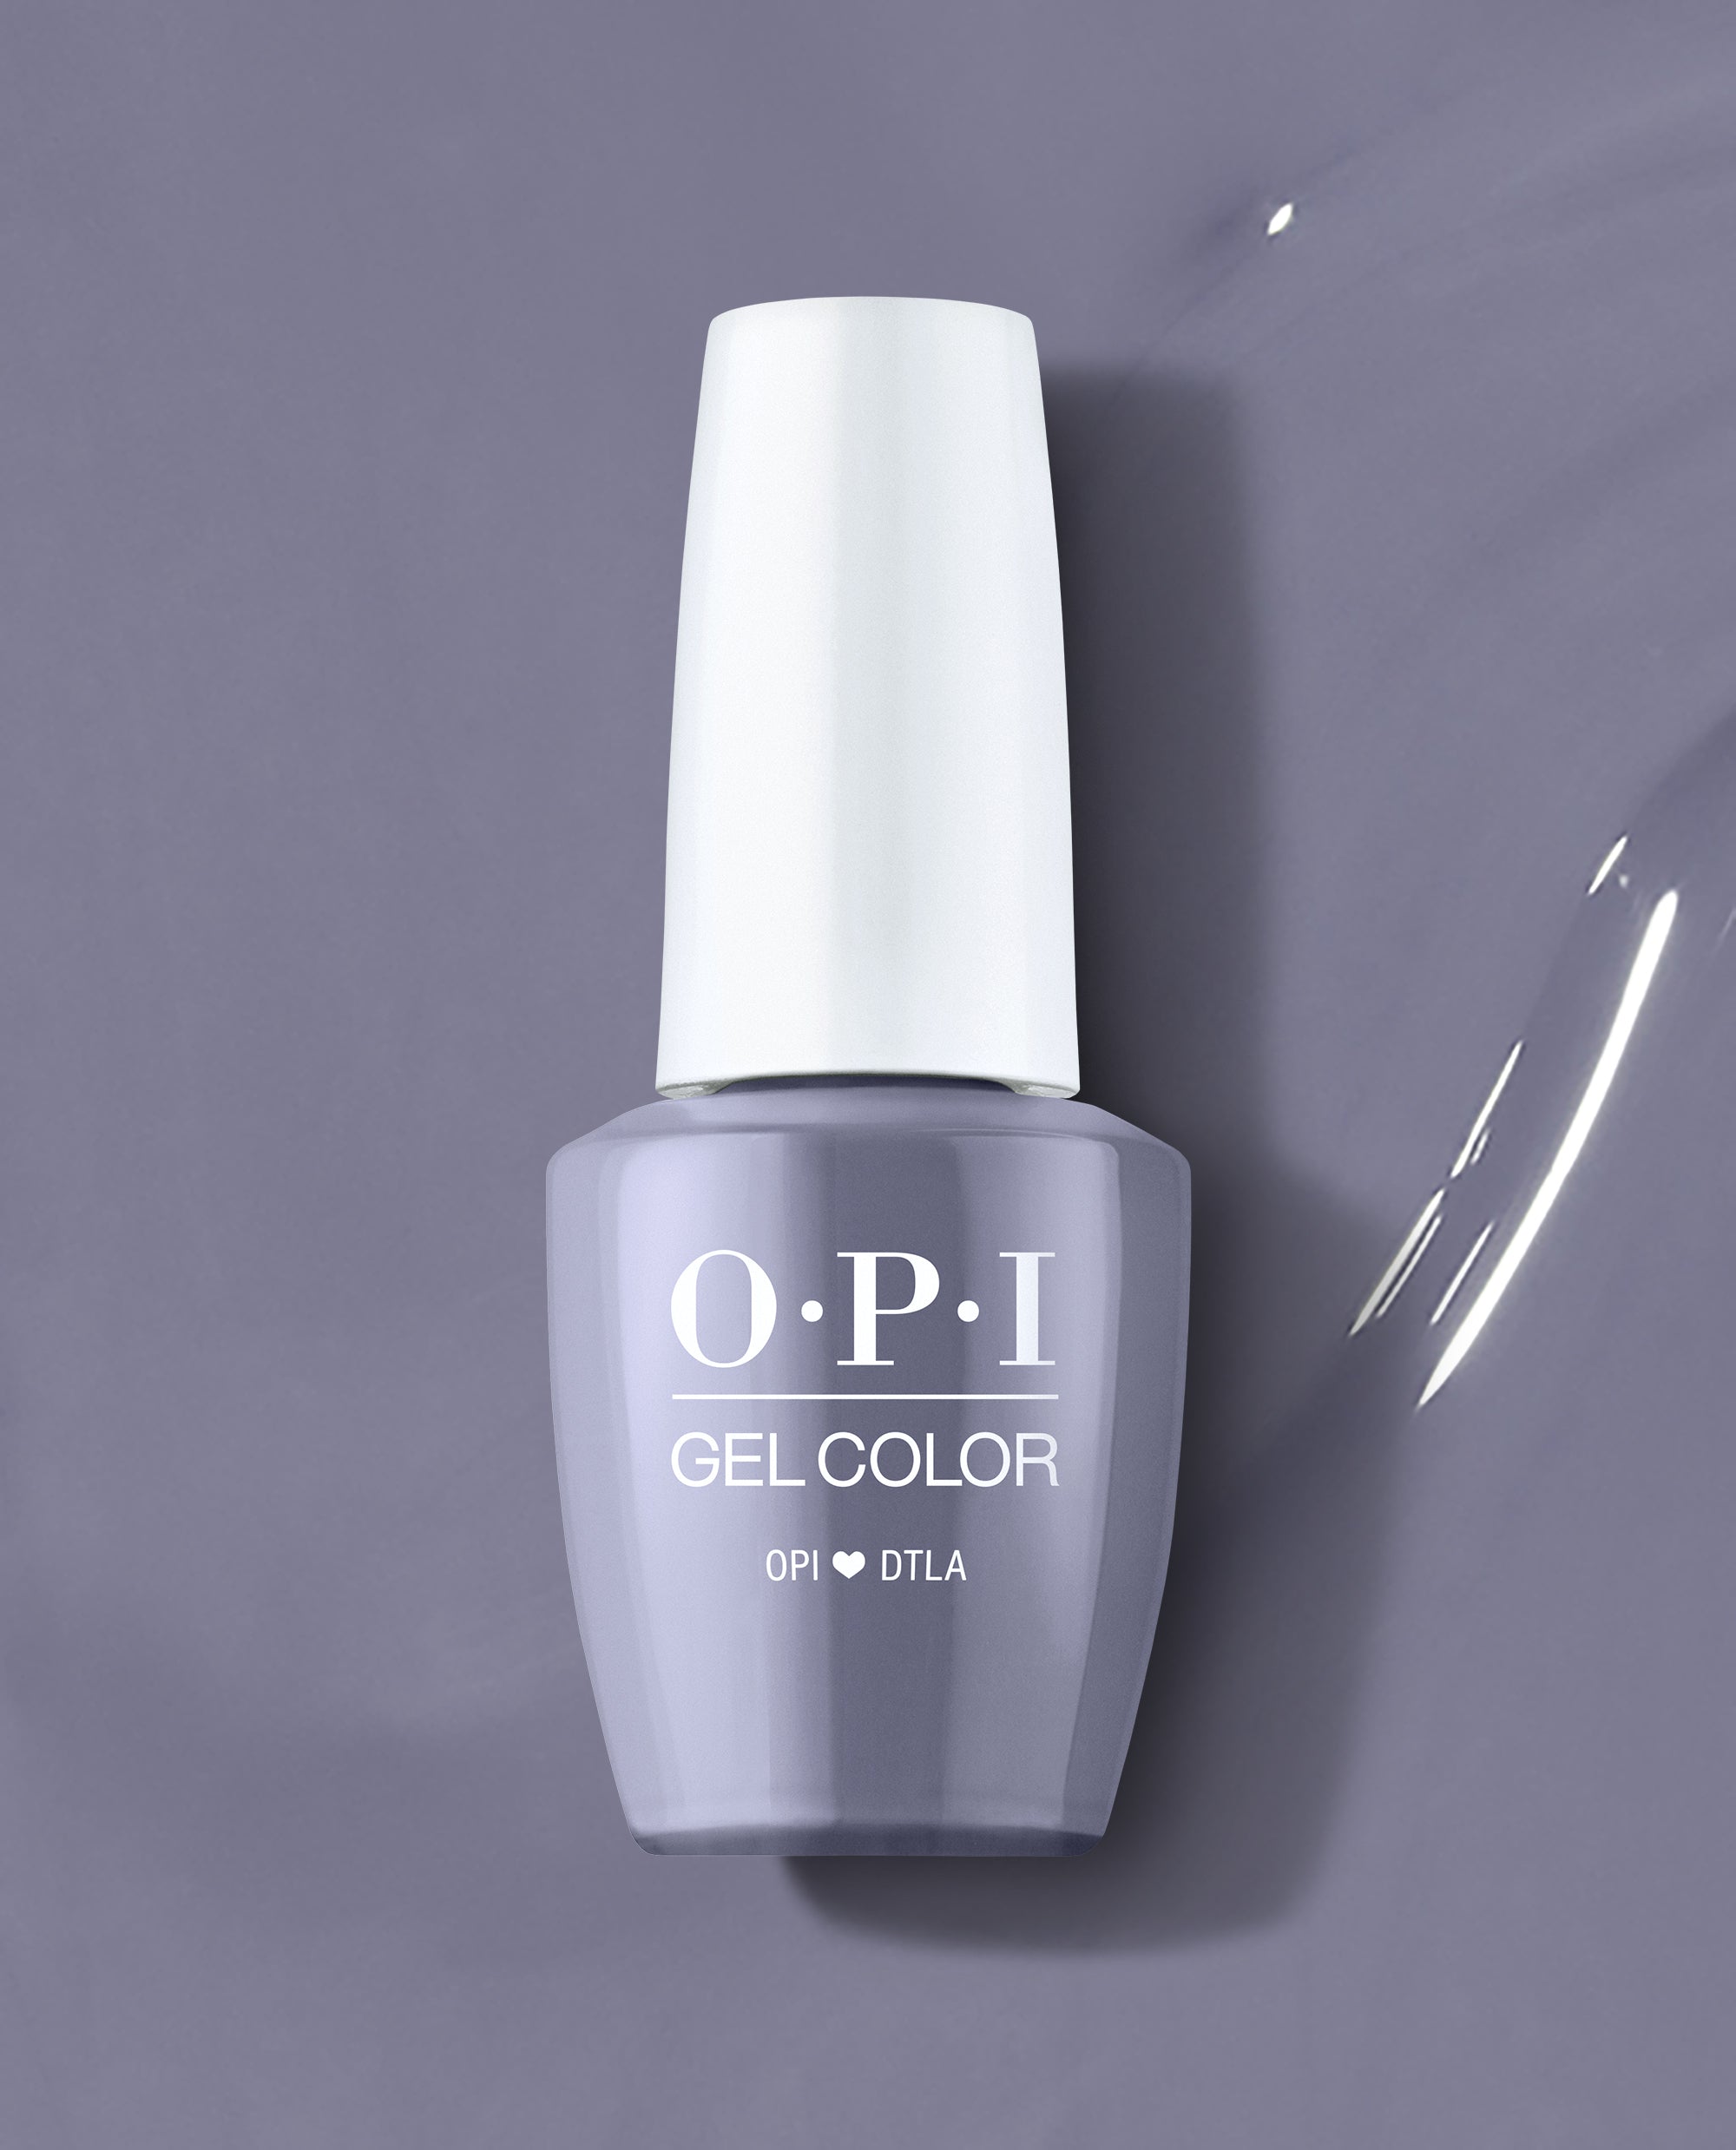 OPI Nail Colors | Unghie beige, Unghie idee, Unghie